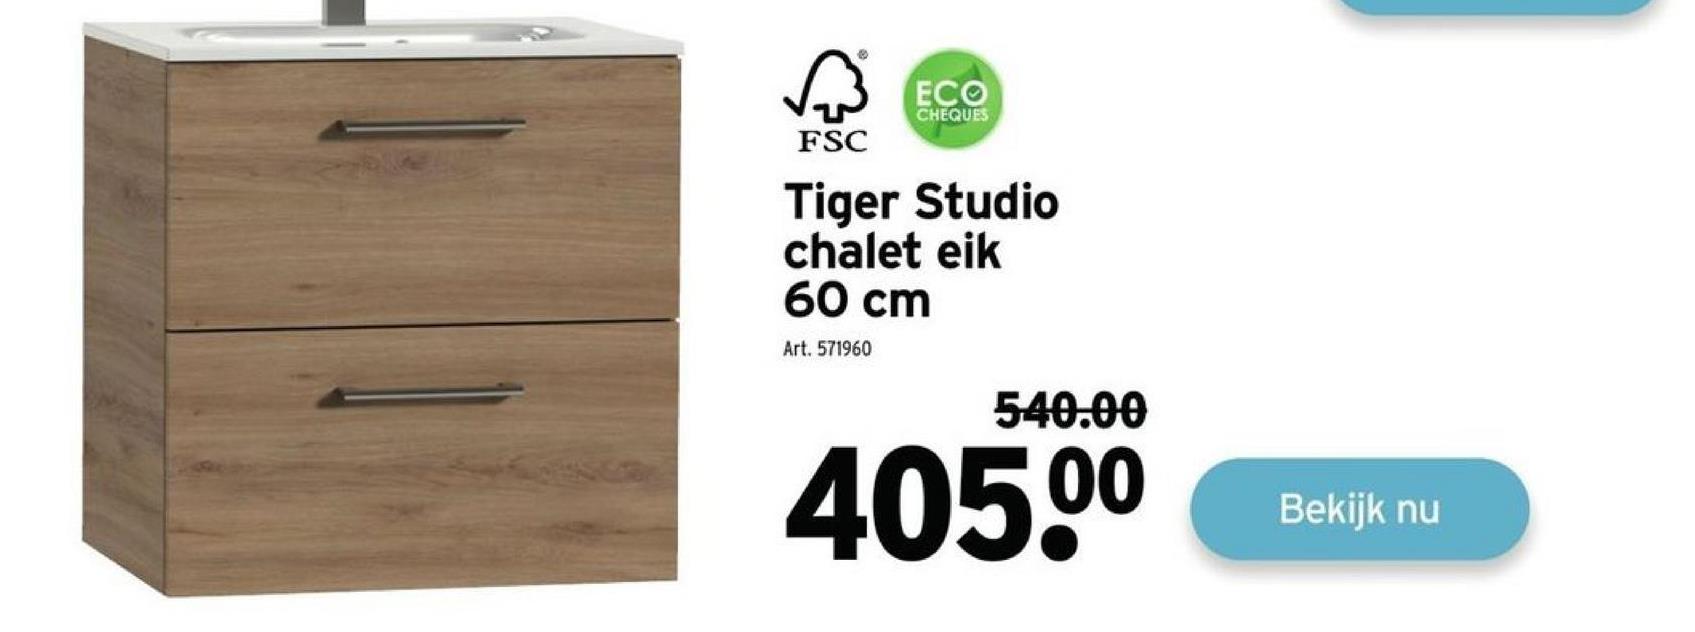 A³
FSC
ECO
CHEQUES
Tiger Studio
chalet eik
60 cm
Art. 571960
540.00
405.⁰⁰
Bekijk nu